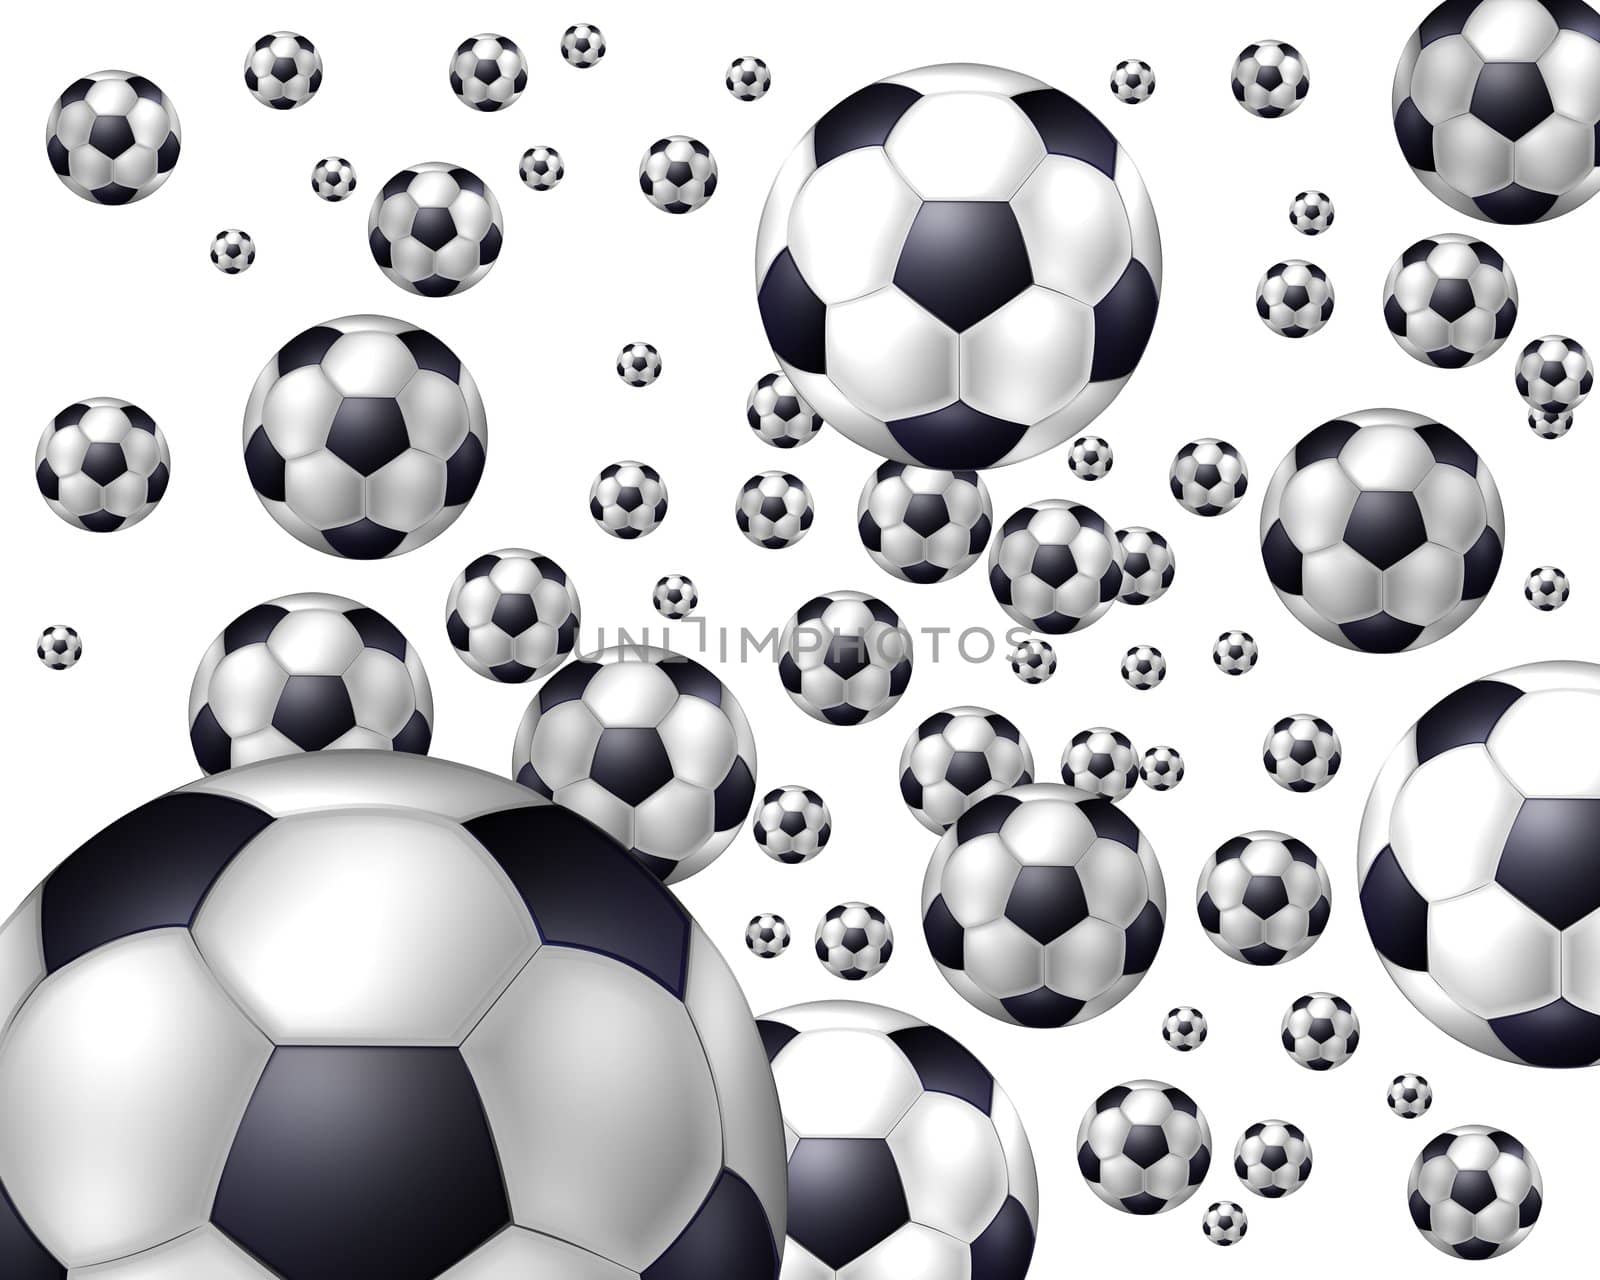 Flying Balls - Soccer by peromarketing